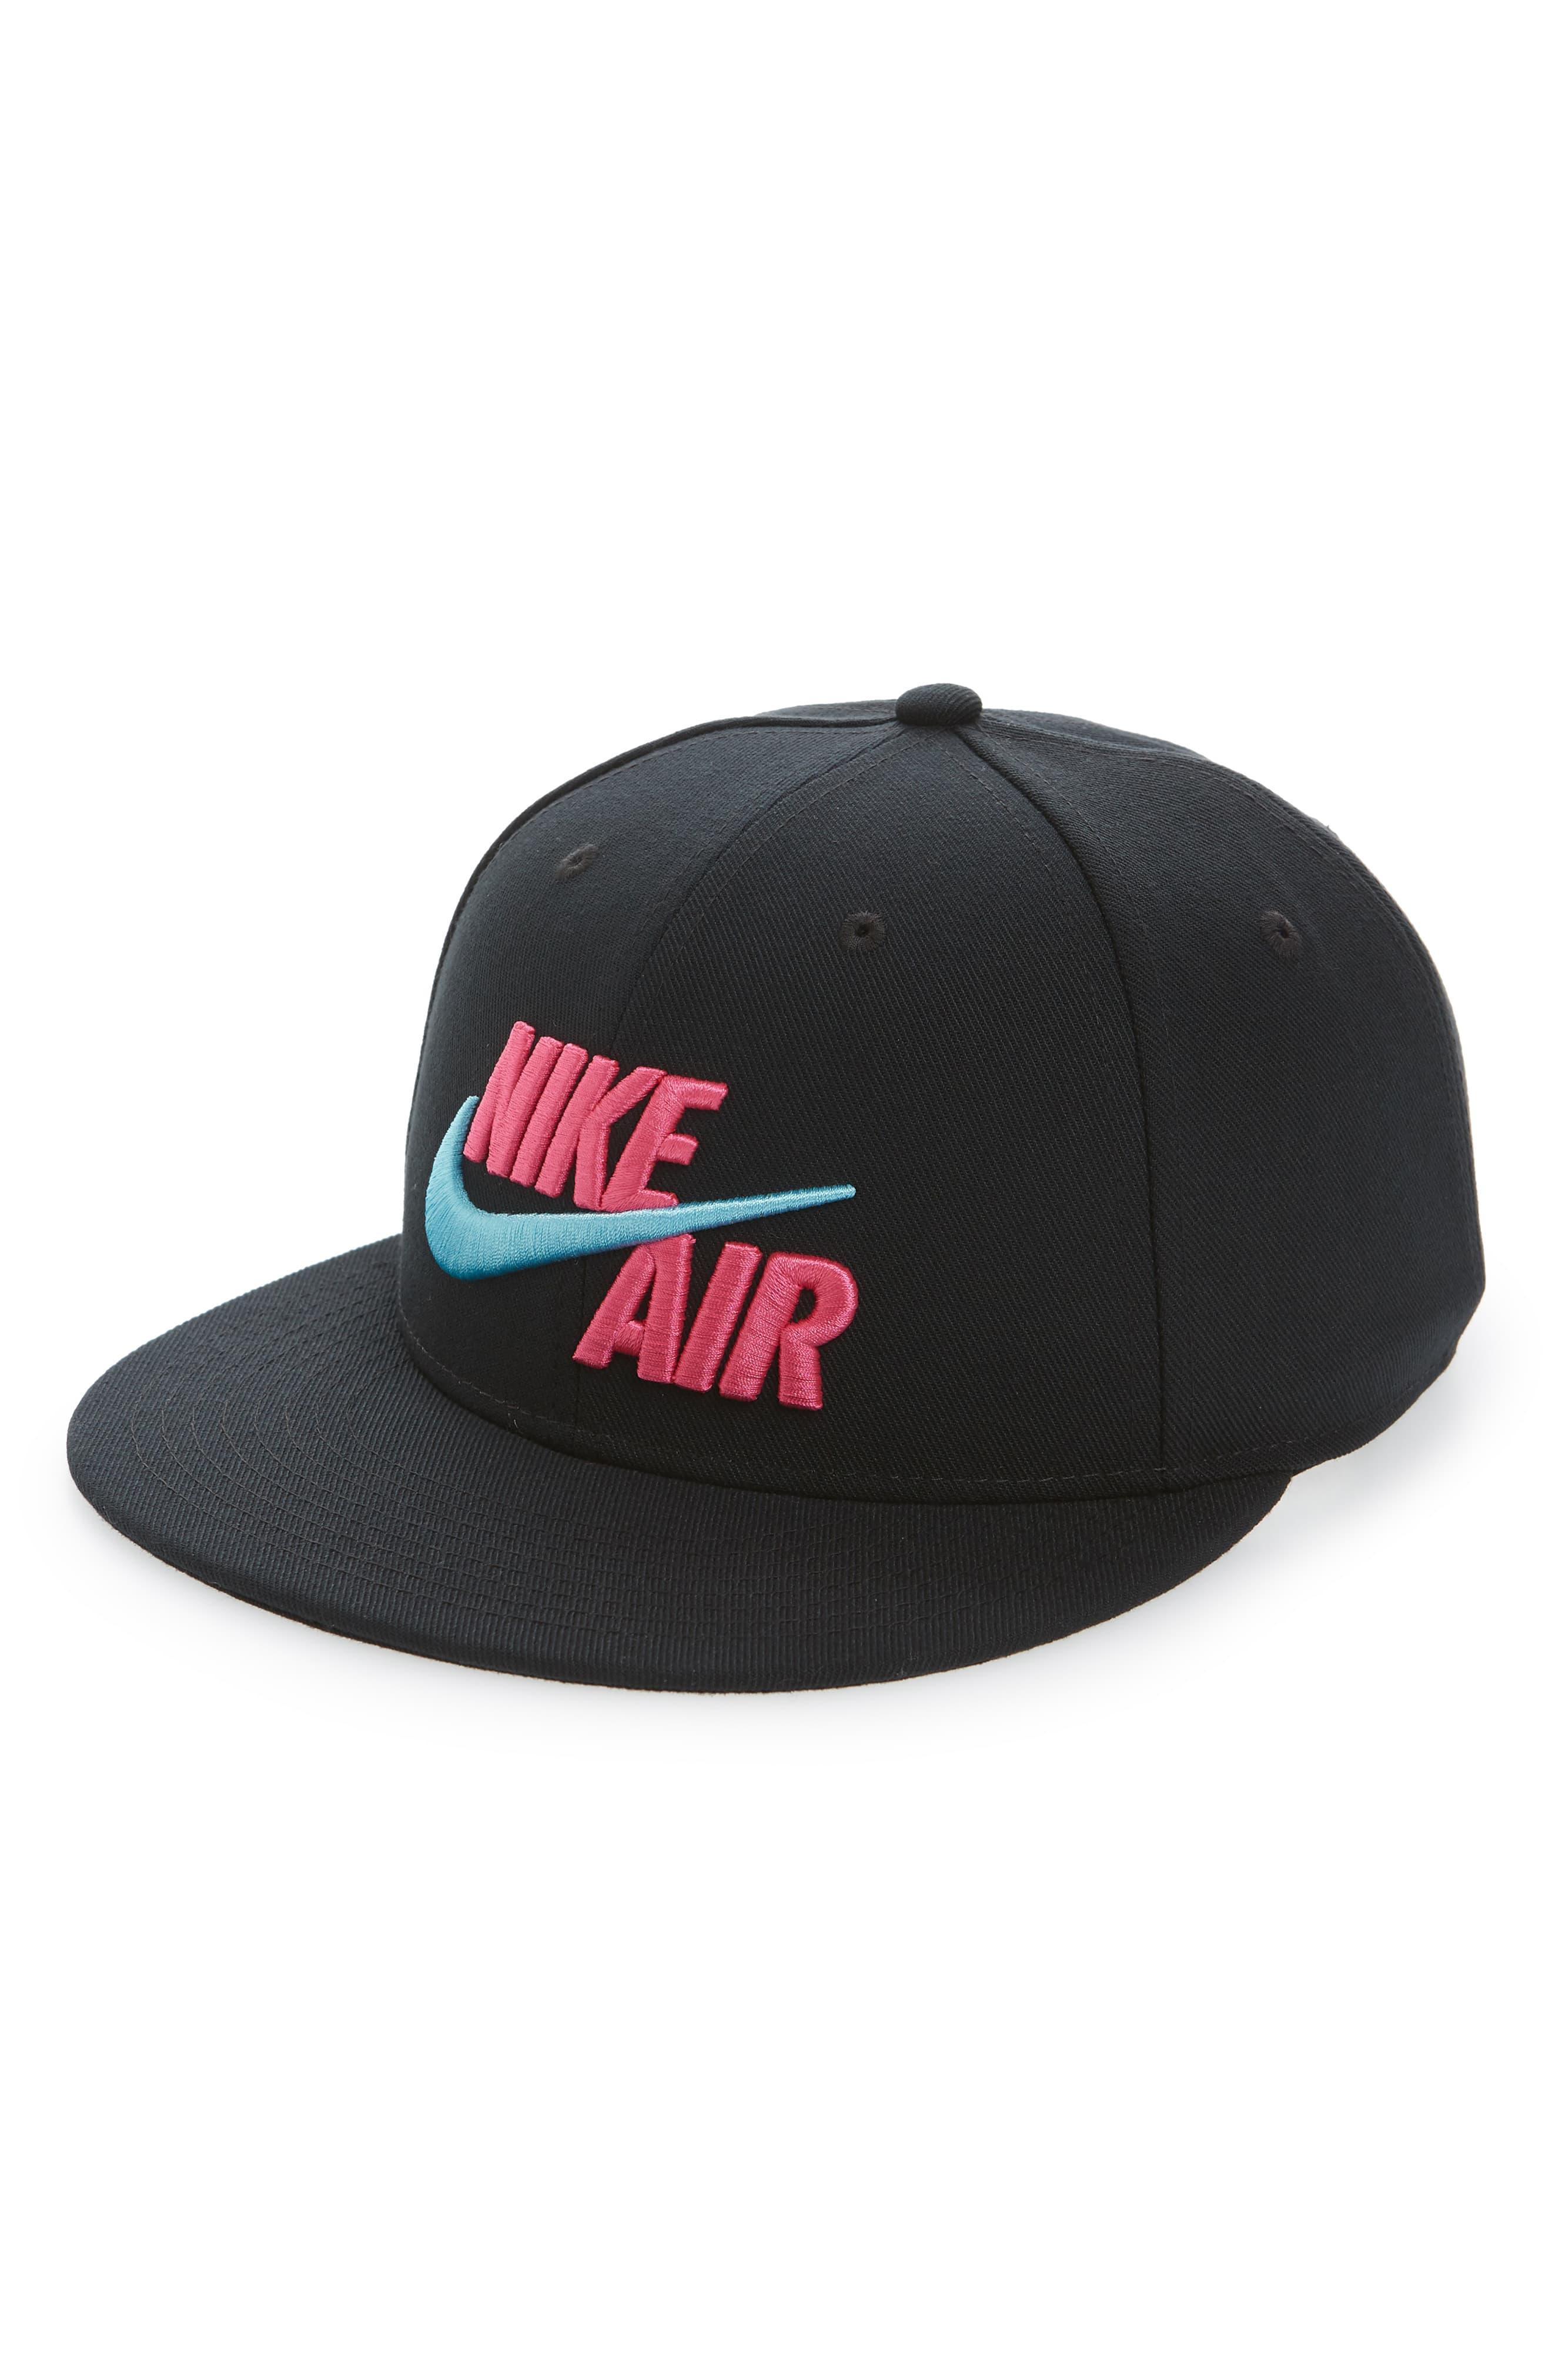 Nike Air True Snapback Baseball Cap in Black for Men - Lyst